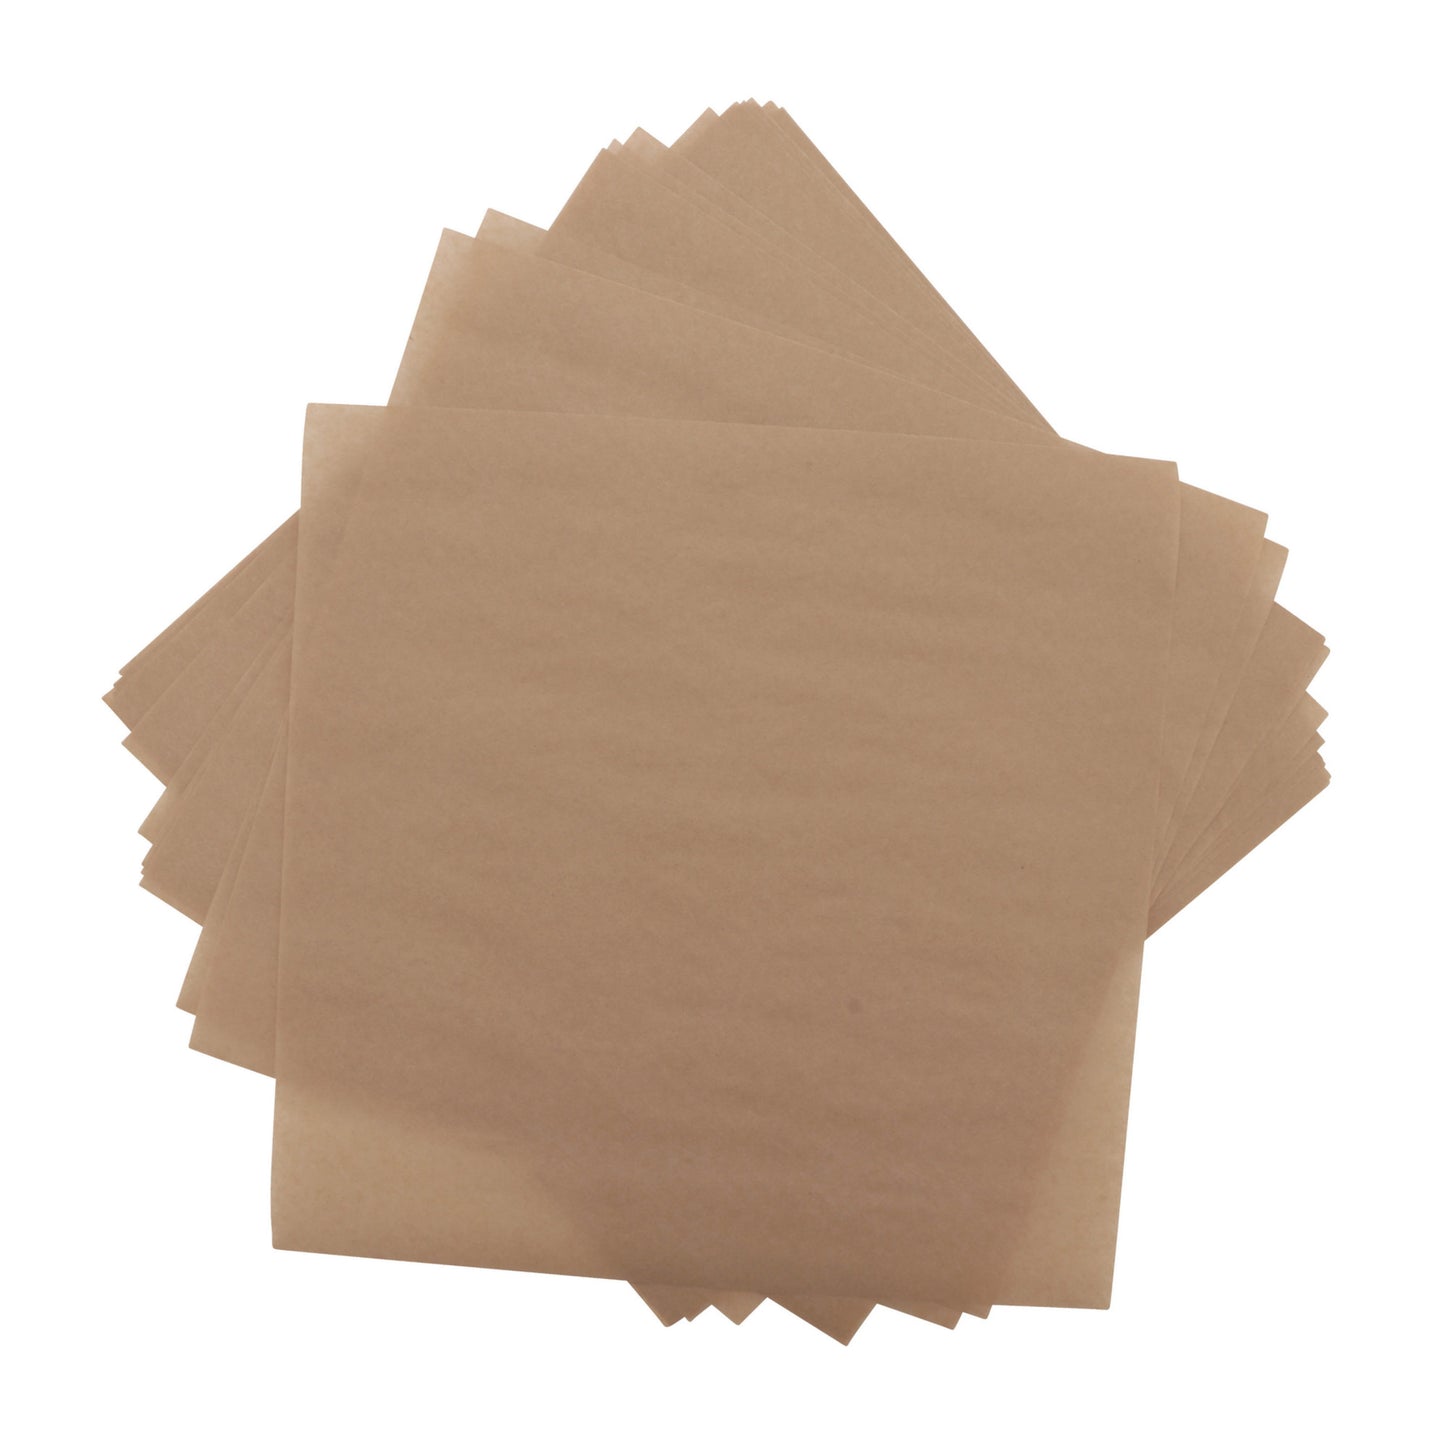 12" x 12" Food-Safe Tissue Liner, Brown, 1000 pieces./cs.